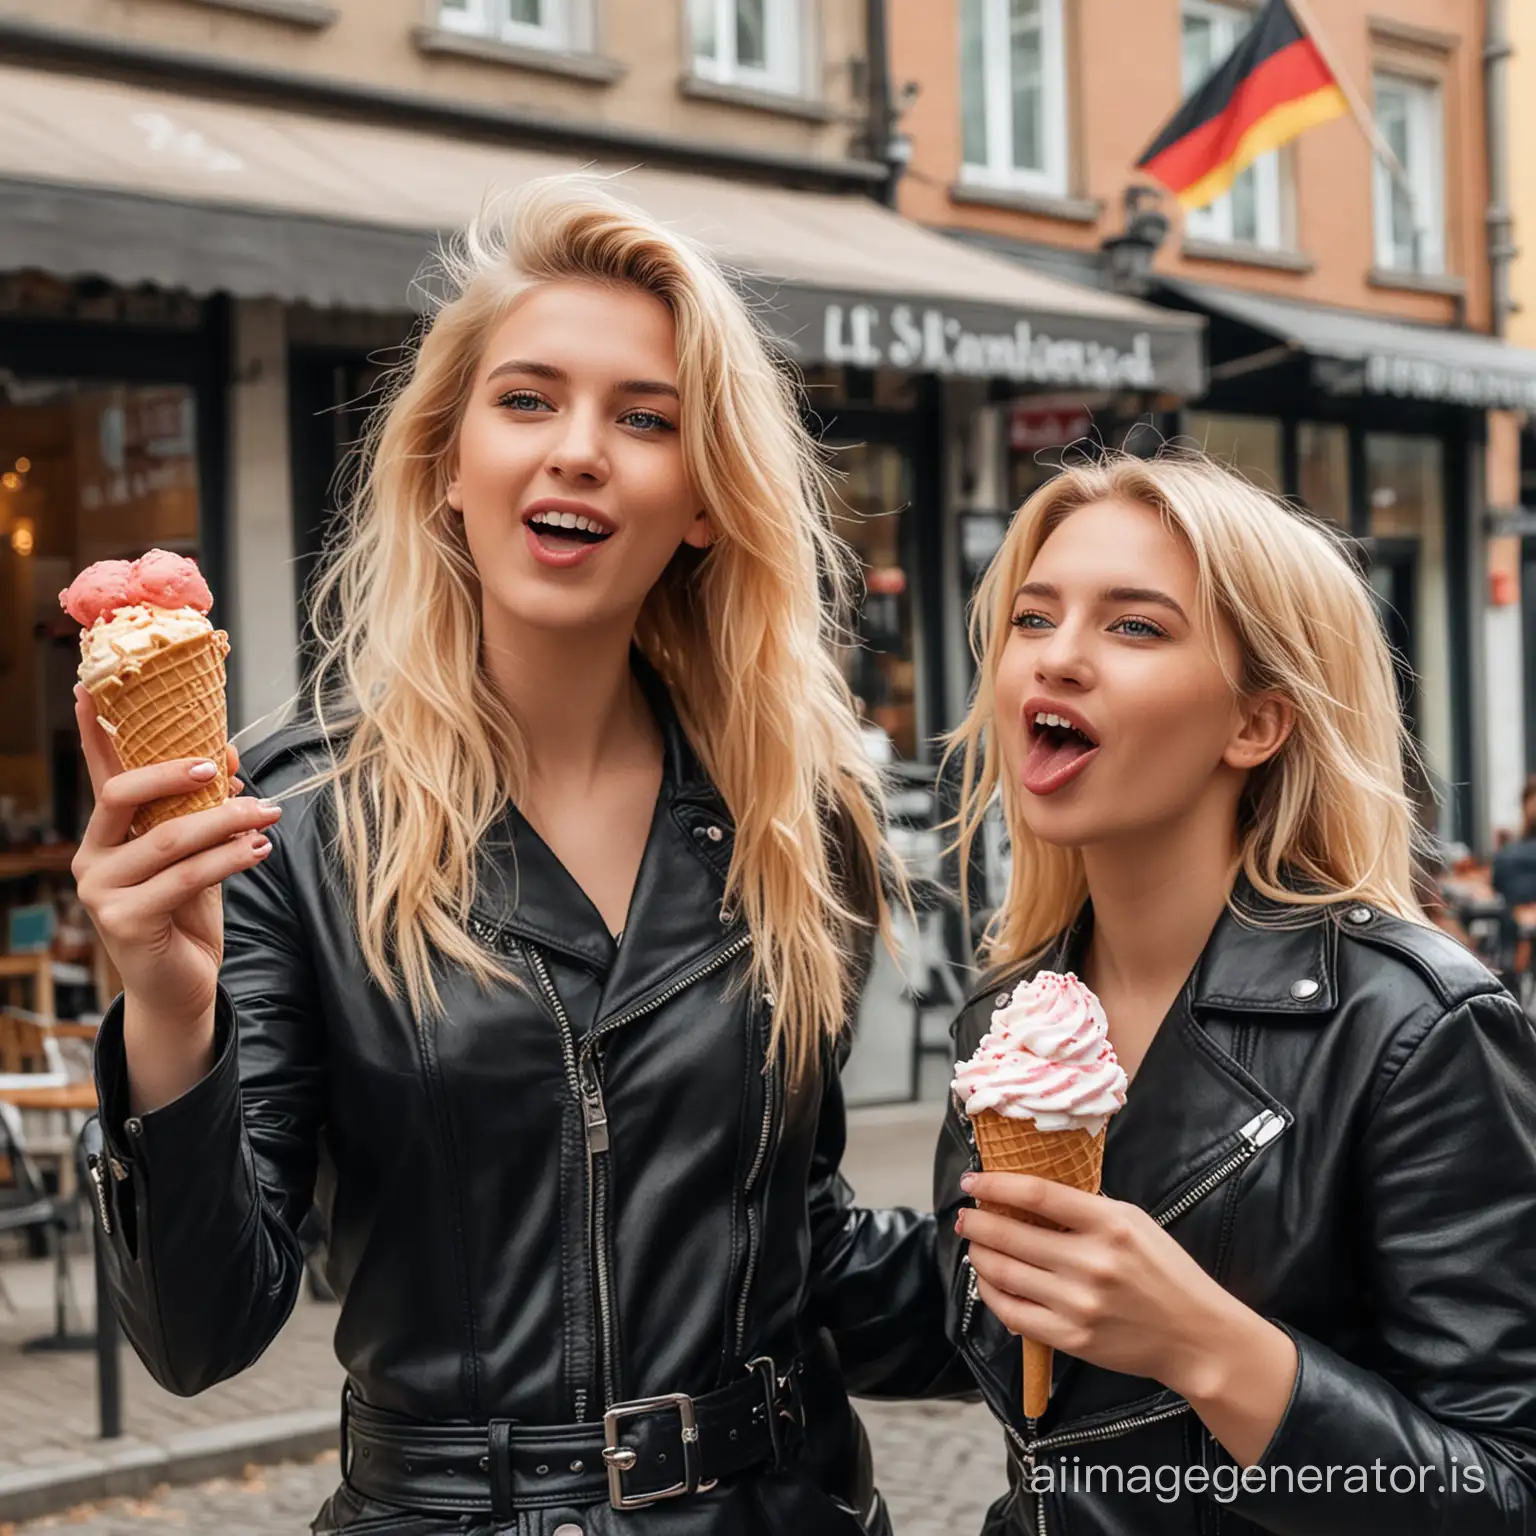 Blonde-Girls-Enjoying-Ice-Cream-Selfie-at-Berlin-Eis-Caf-with-German-Flag-Background